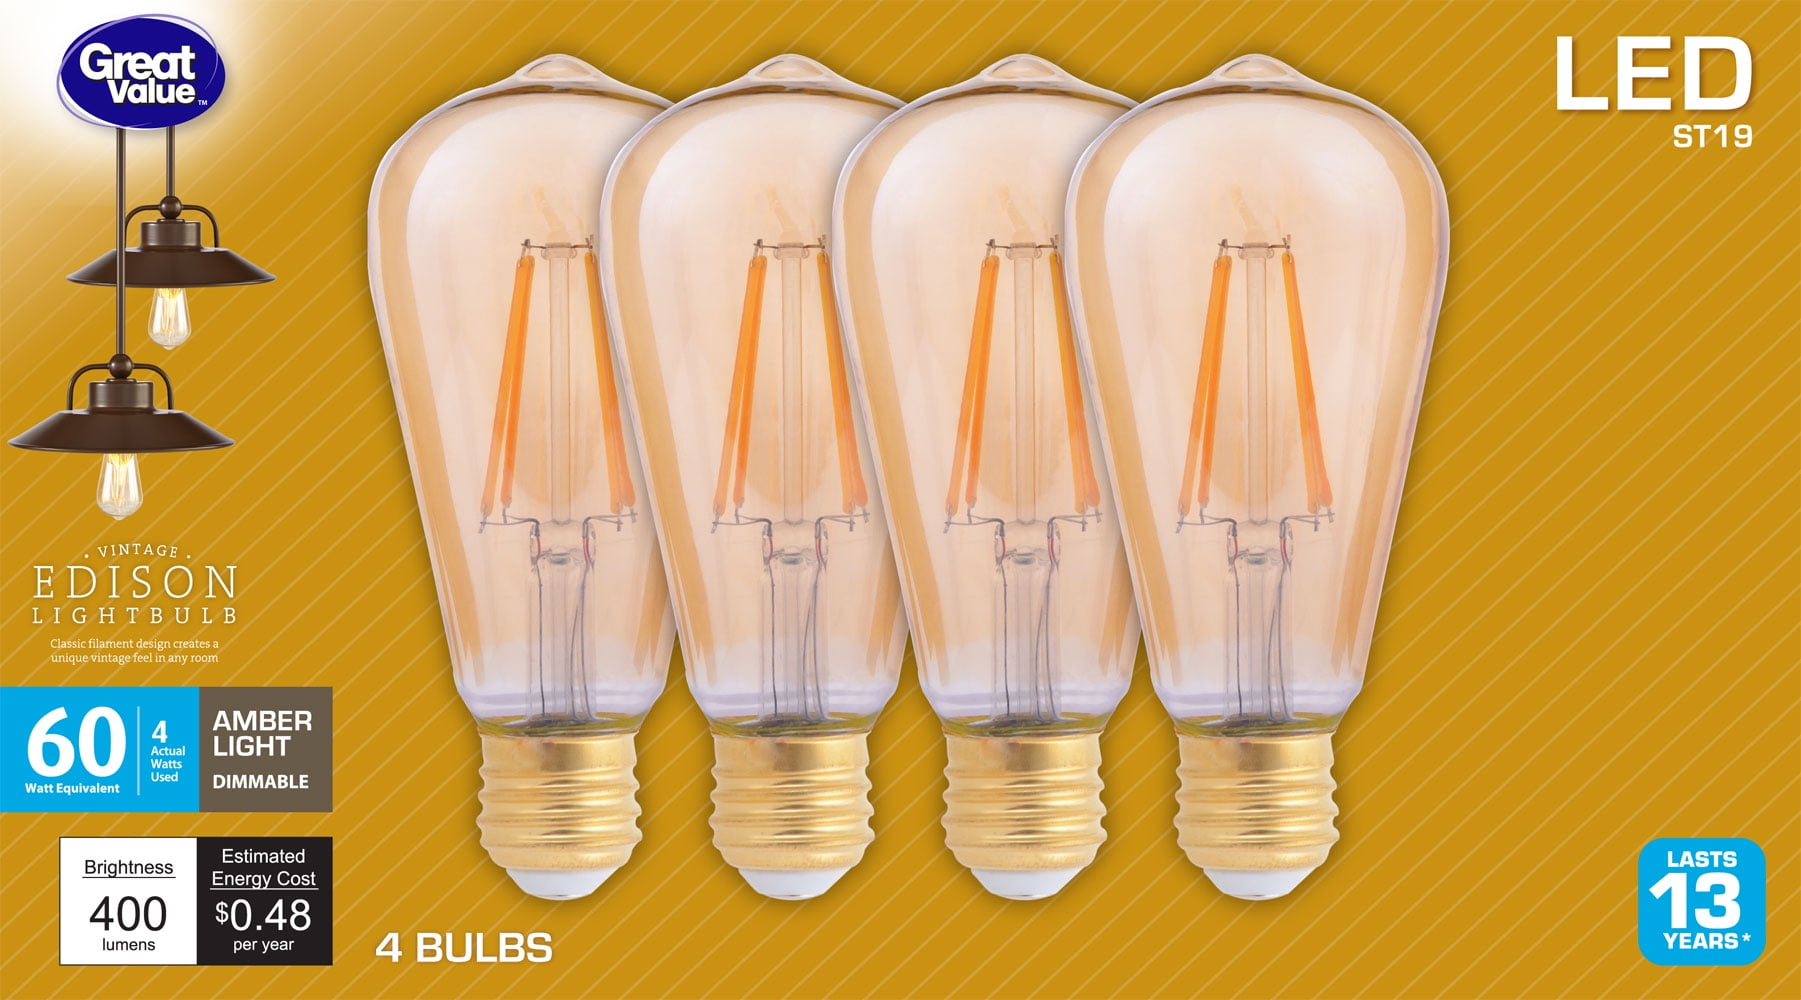 Yellow 60 Watt A19 LightBulb 60A19/CY Guaranteed LongLife Made in USA 4-Bulbs 